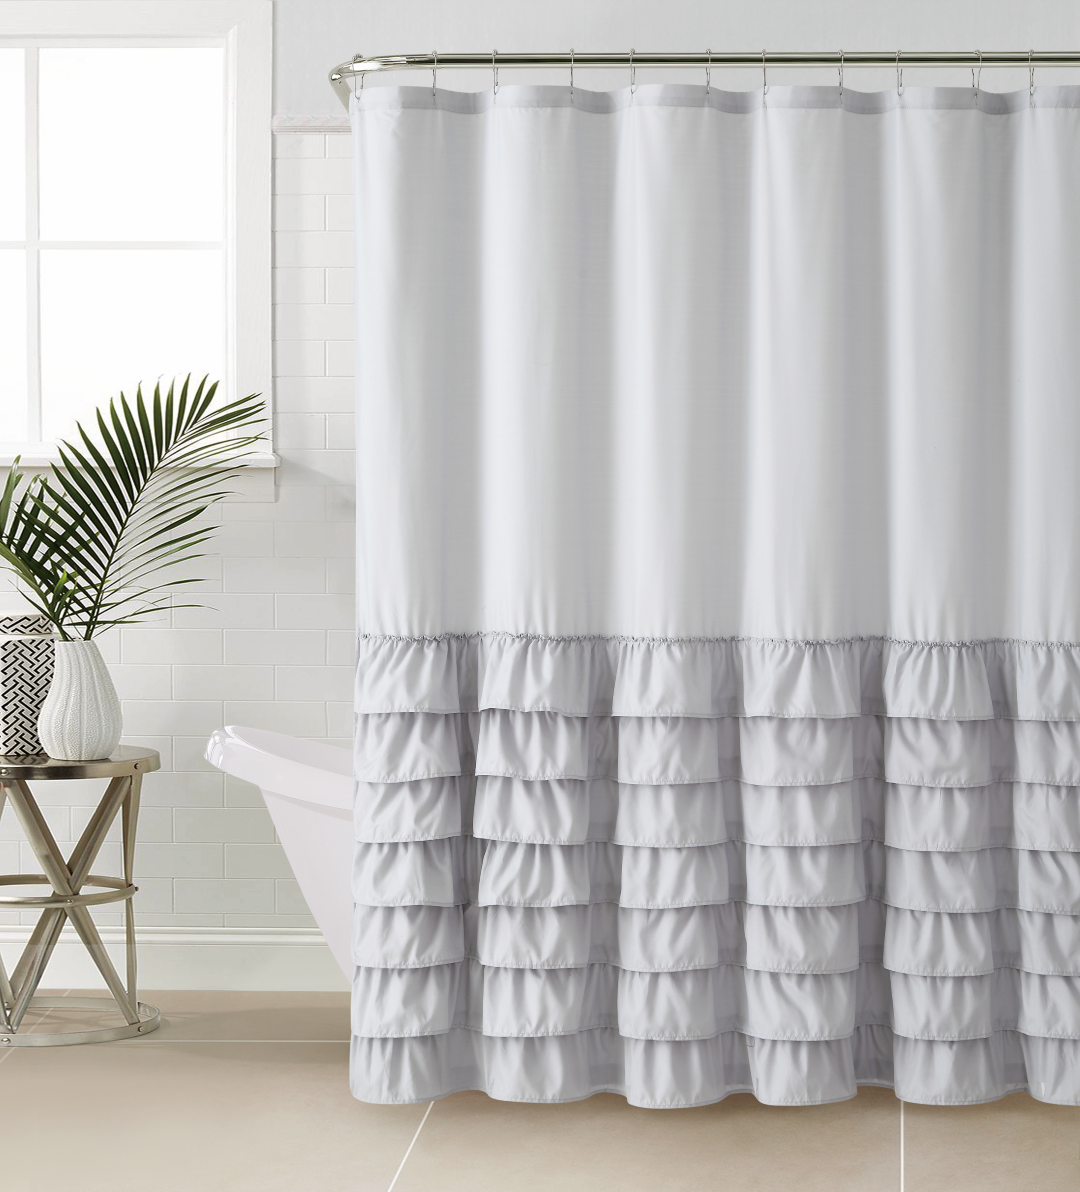 VCNY Home Melanie Ruffle Shower Curtain